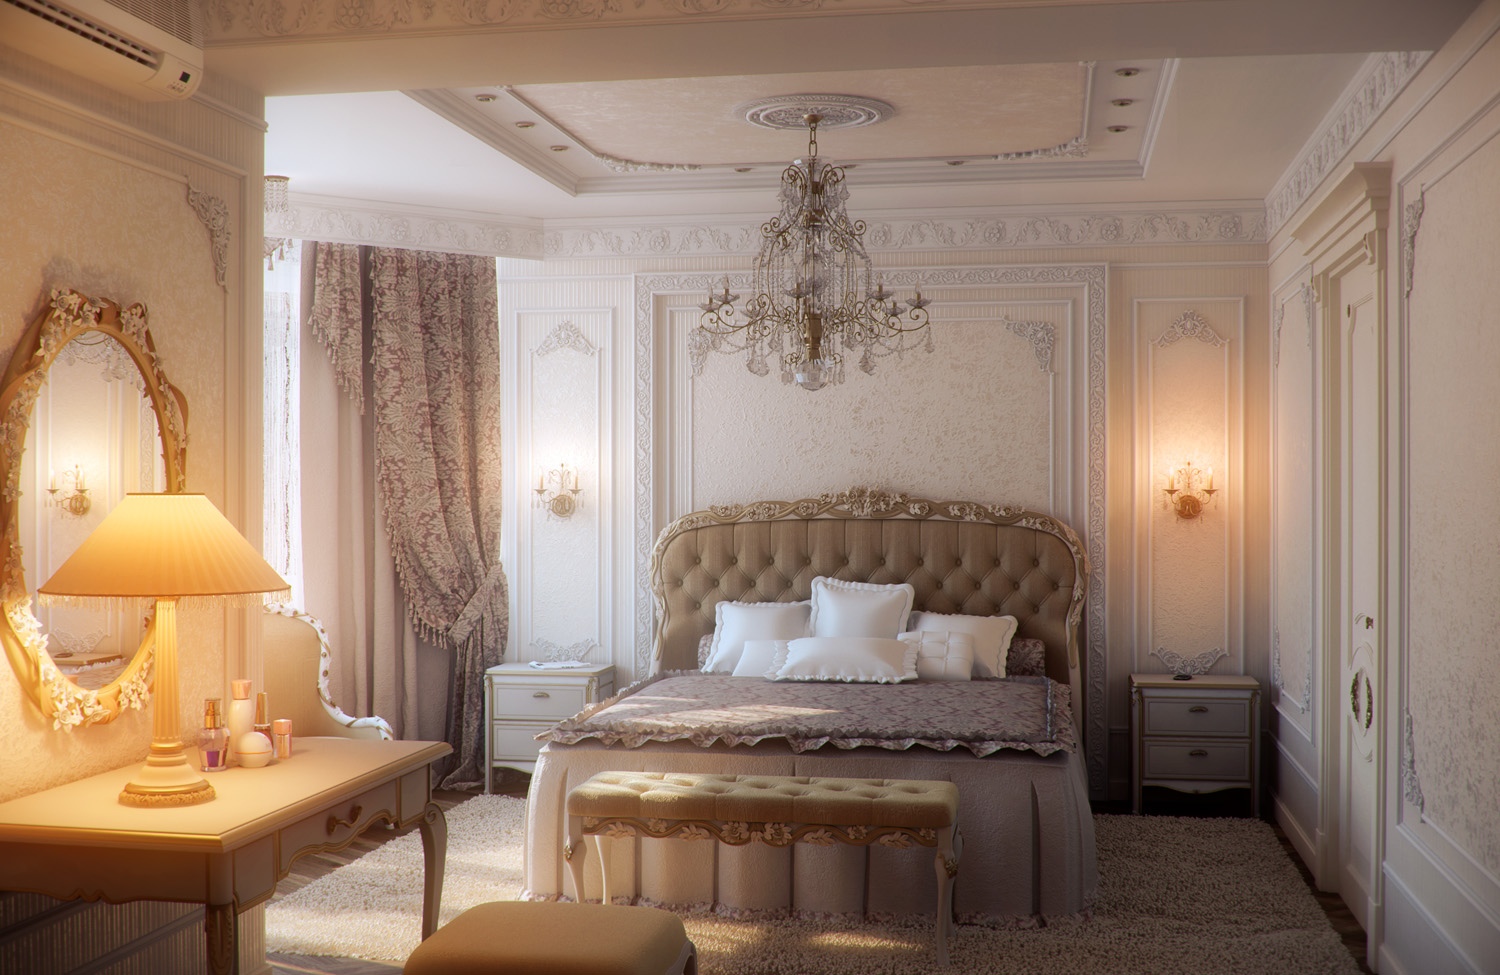 Luxury and elegant bedroom design decor "width =" 1500 "height =" 975 "srcset =" https://mileray.com/wp-content/uploads/2020/05/1588509604_271_Decorating-Elegant-Bedroom-Designs-Adding-a-Perfect-Classic-and-Luxury.jpg 1500w, https: // myfashionos .com / wp-content / uploads / 2016/09 / Timur-Kochorov-300x195.jpg 300w, https://mileray.com/wp-content/uploads/2016/09/Timur-Kochorov-768x499.jpg 768w, https : //mileray.com/wp-content/uploads/2016/09/Timur-Kochorov-1024x666.jpg 1024w, https://mileray.com/wp-content/uploads/2016/09/Timur-Kochorov-696x452. jpg 696w, https://mileray.com/wp-content/uploads/2016/09/Timur-Kochorov-1068x694.jpg 1068w, https://mileray.com/wp-content/uploads/2016/09/Timur- Kochorov-646x420.jpg 646w "sizes =" (maximum width: 1500px) 100vw, 1500px